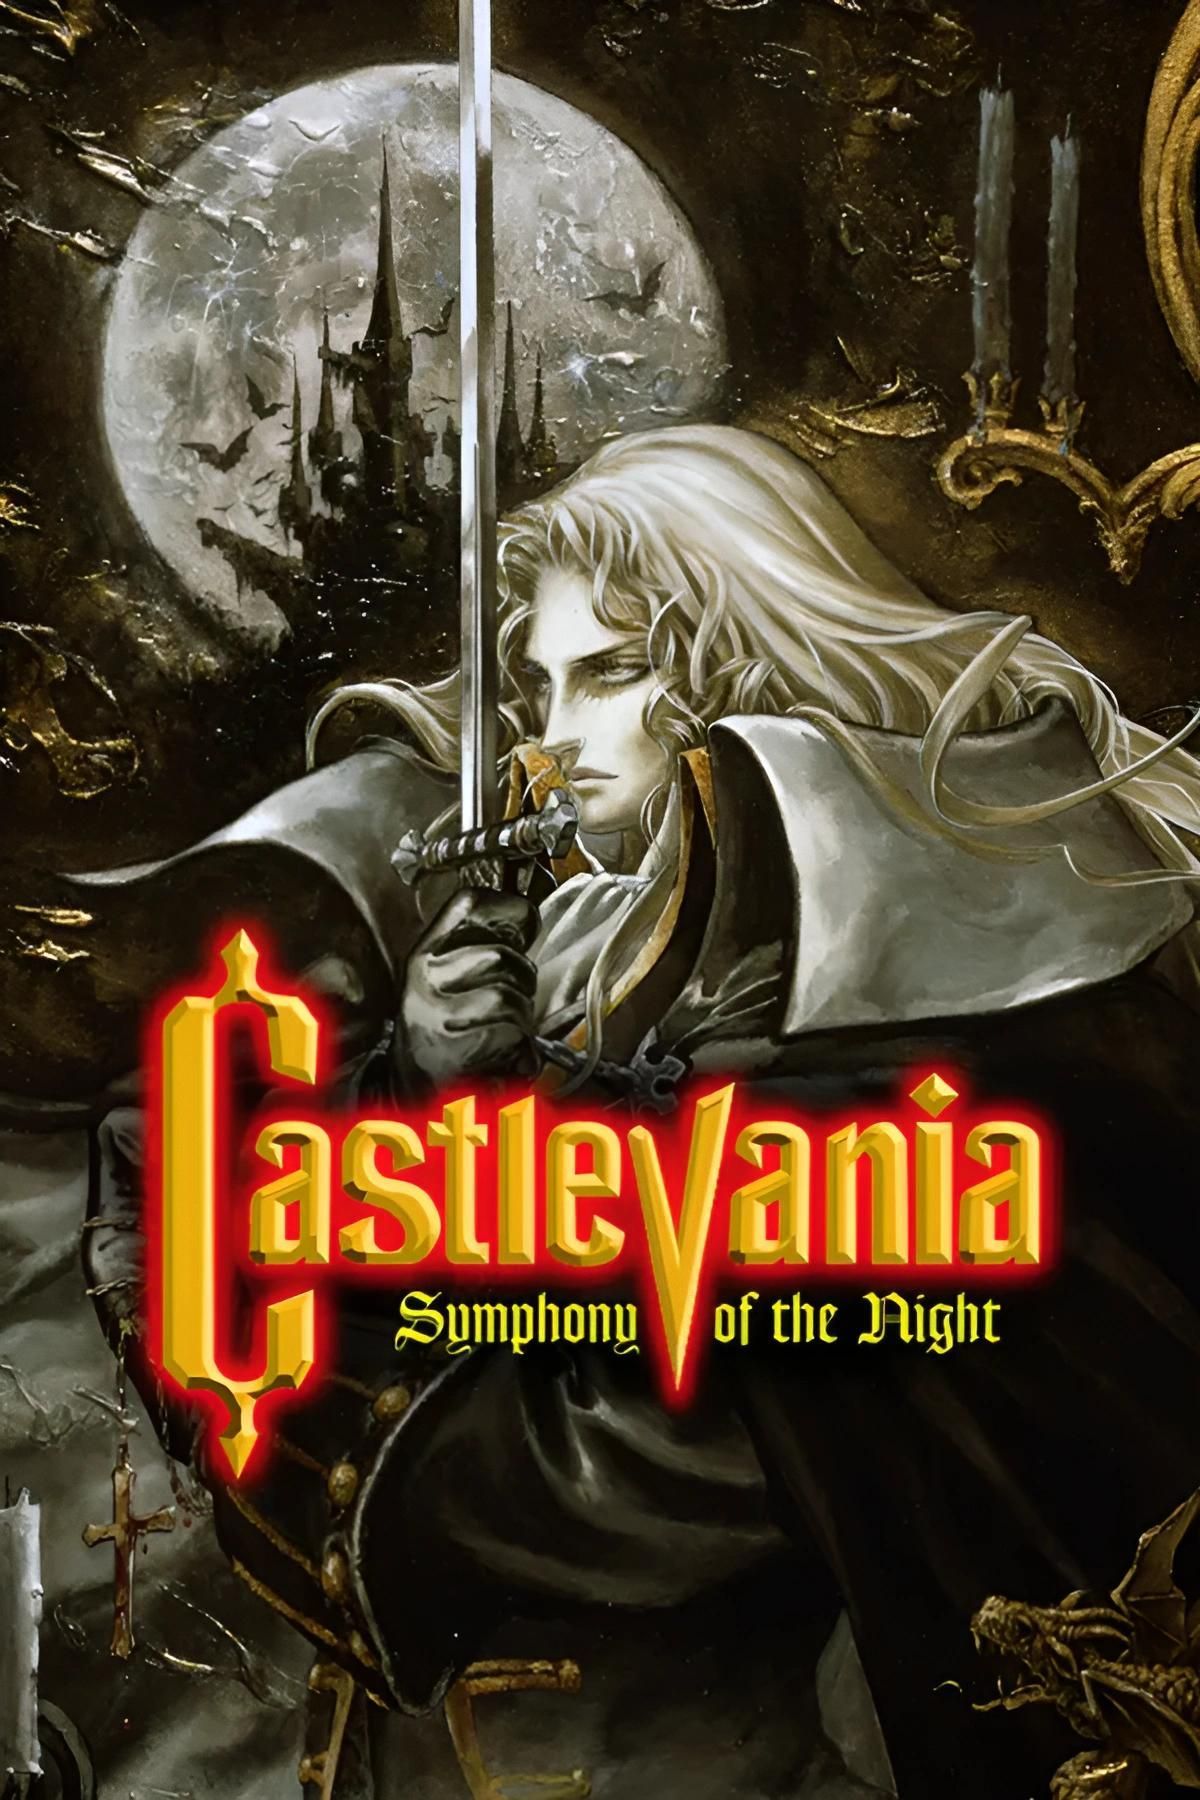 Castlevania Symphony of the Night